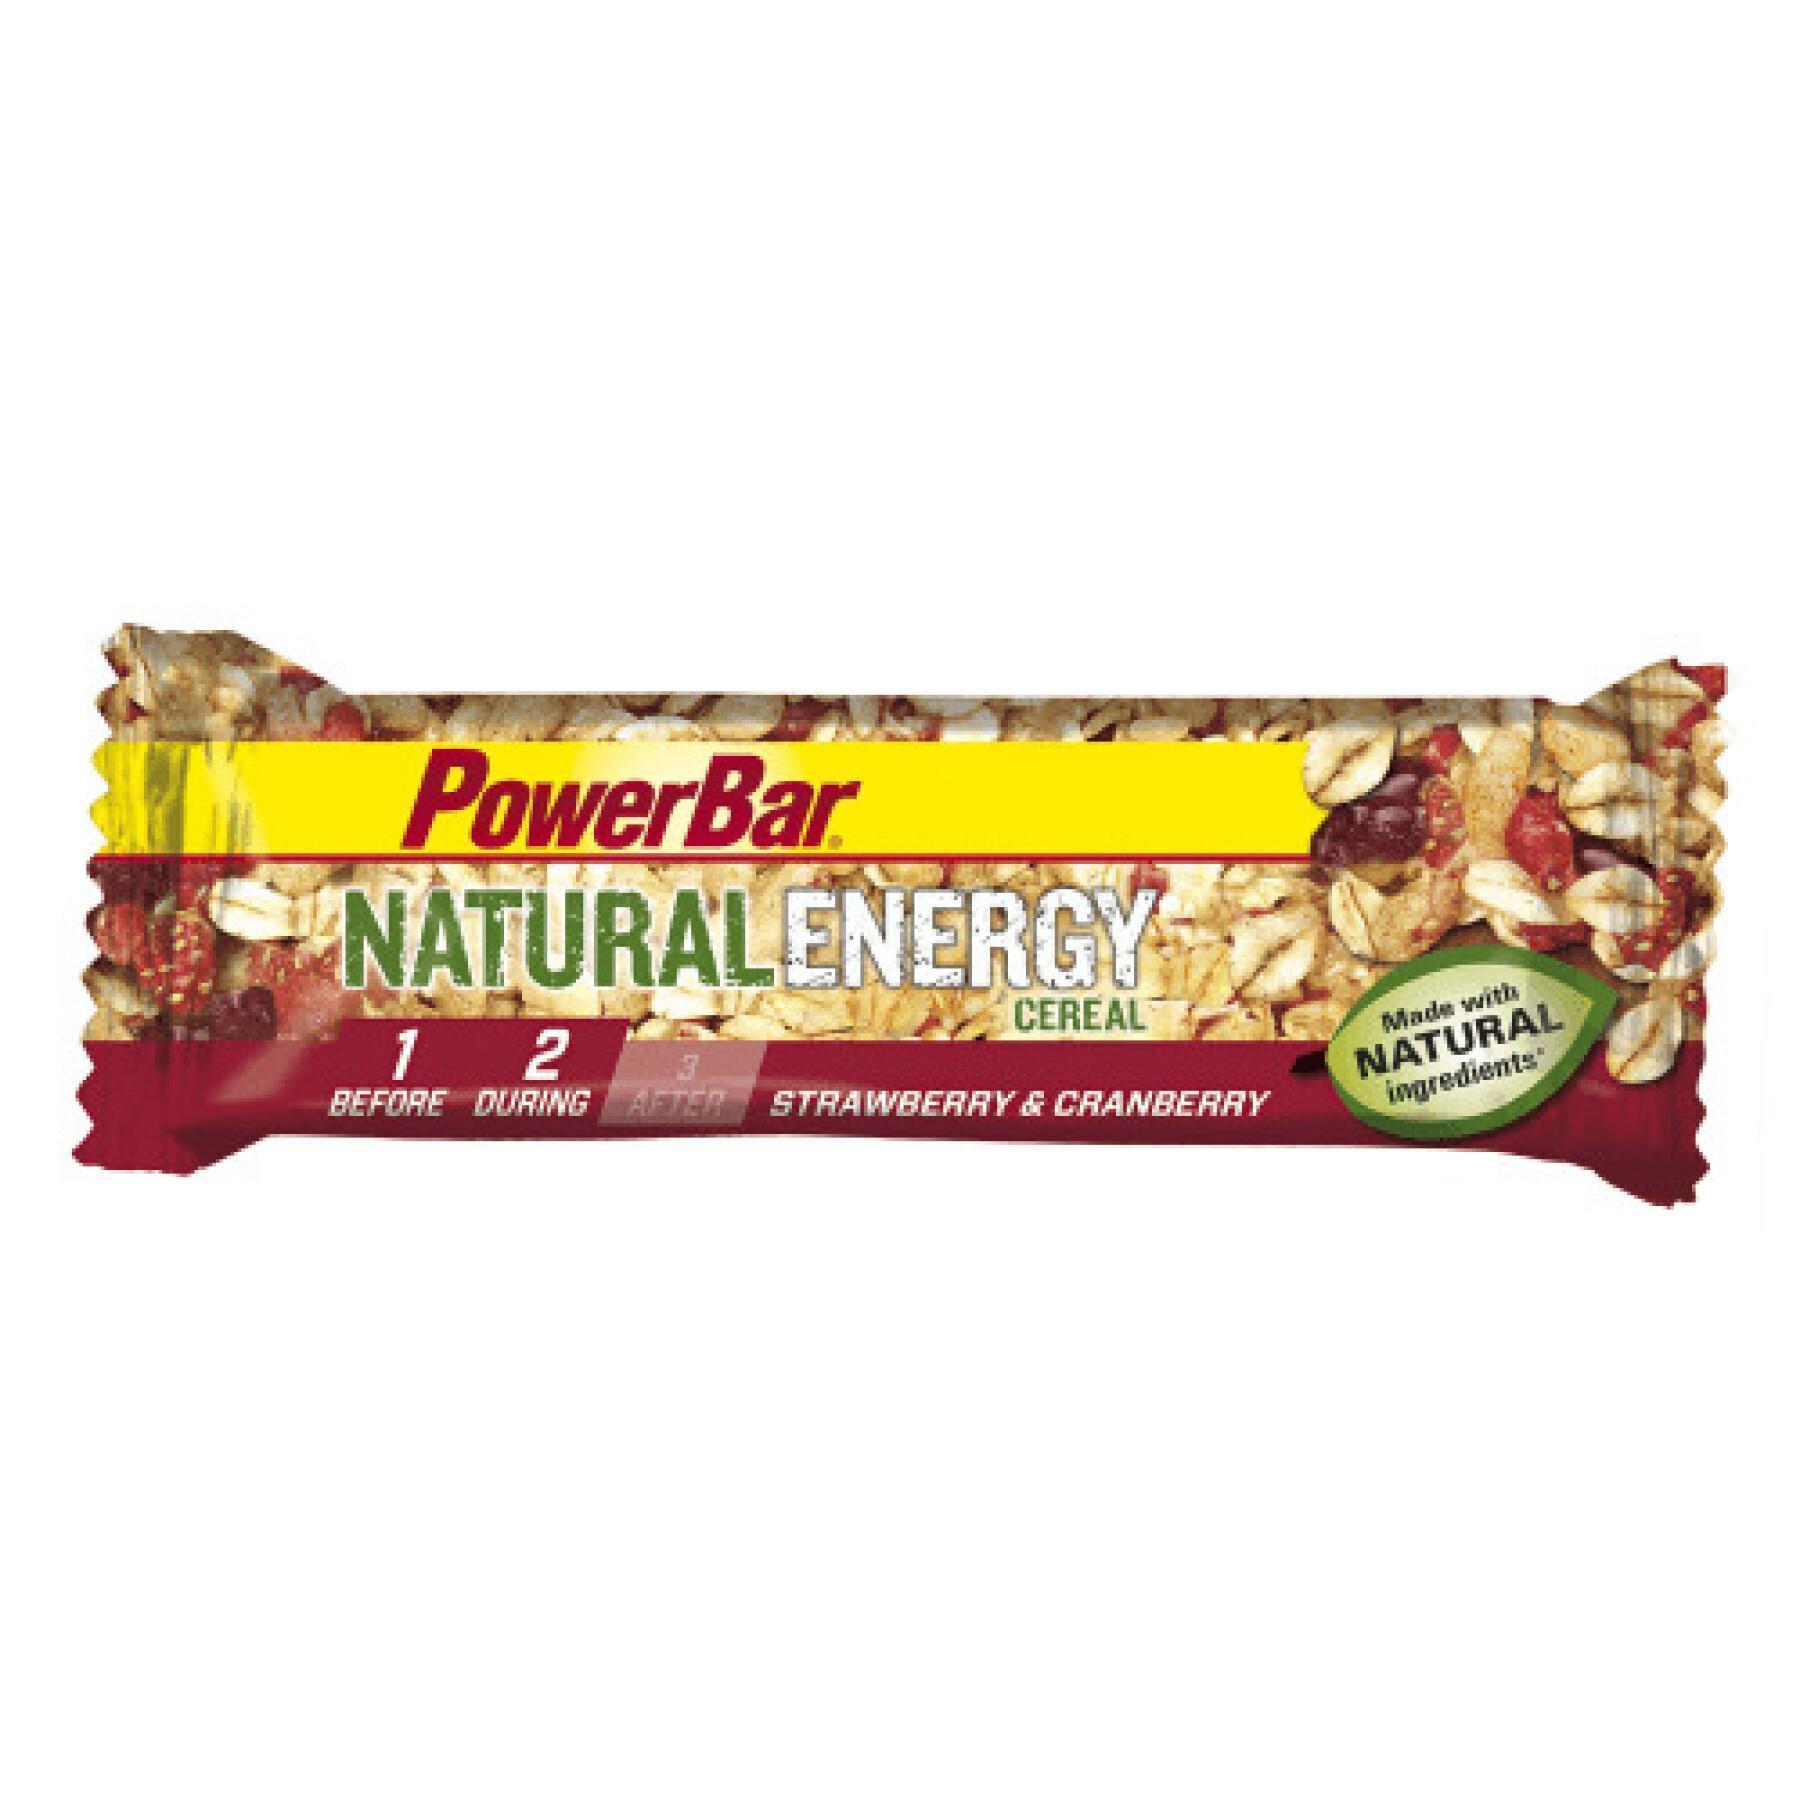 Lote de 24 barras PowerBar Natural Energy Cereals - Strawberry & Cranberry